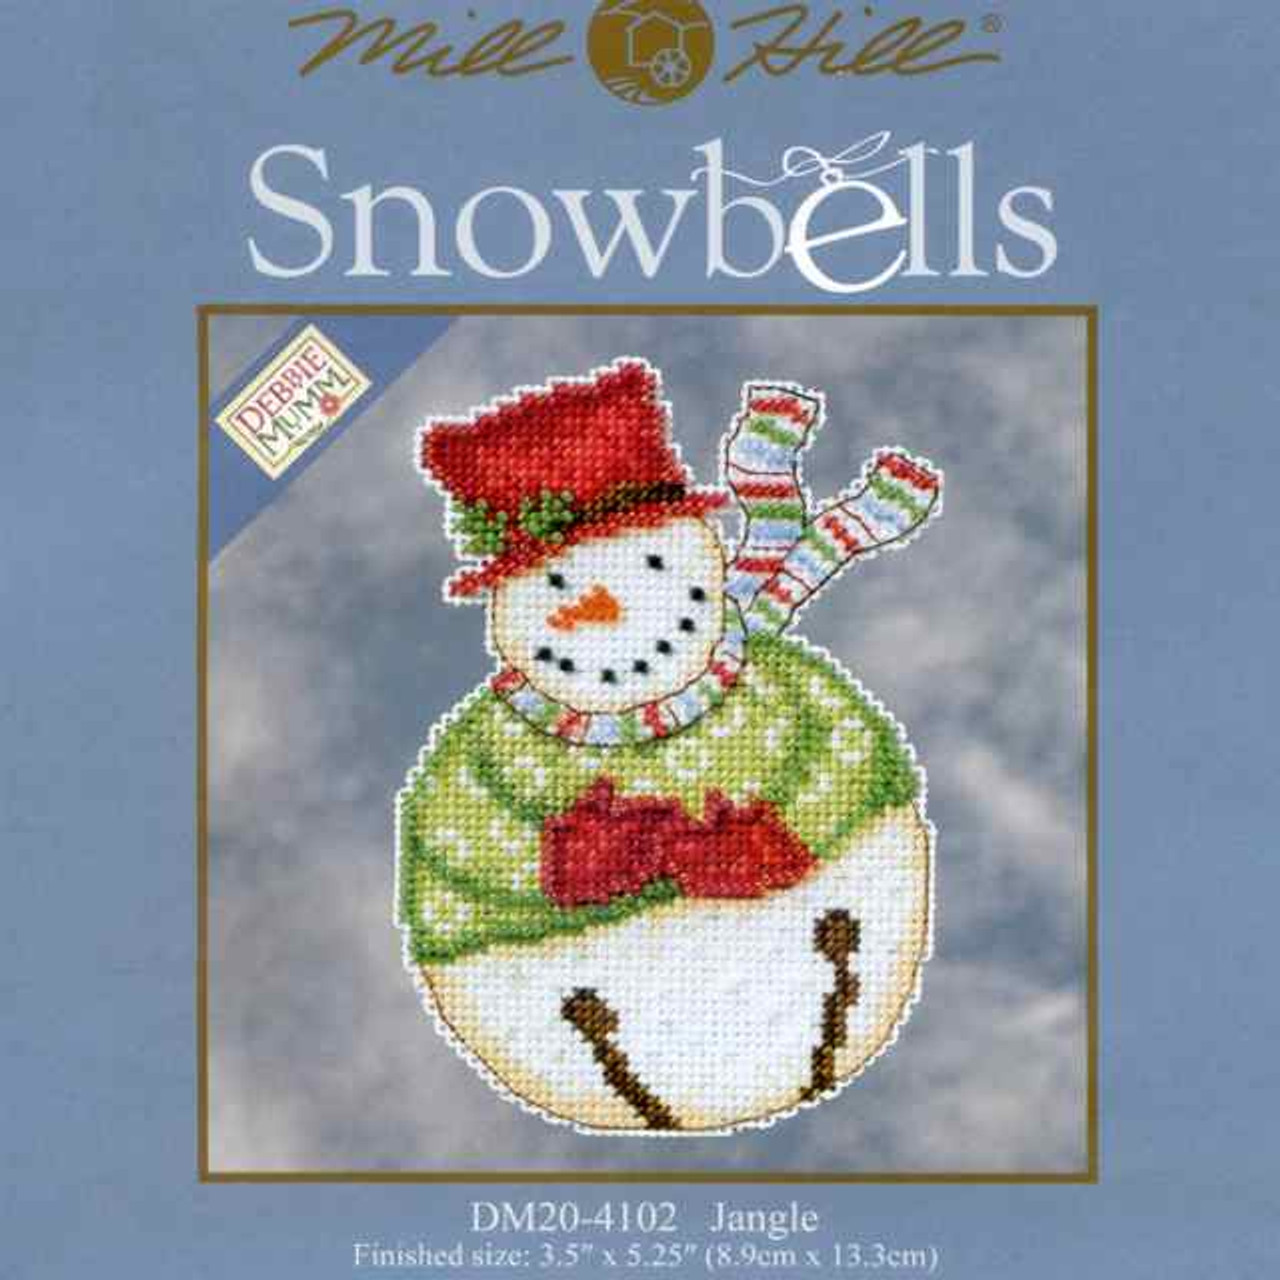 Package insert for Jangle Snowbell Cross Stitch Kit Debbie Mumm 2014 Snowbells